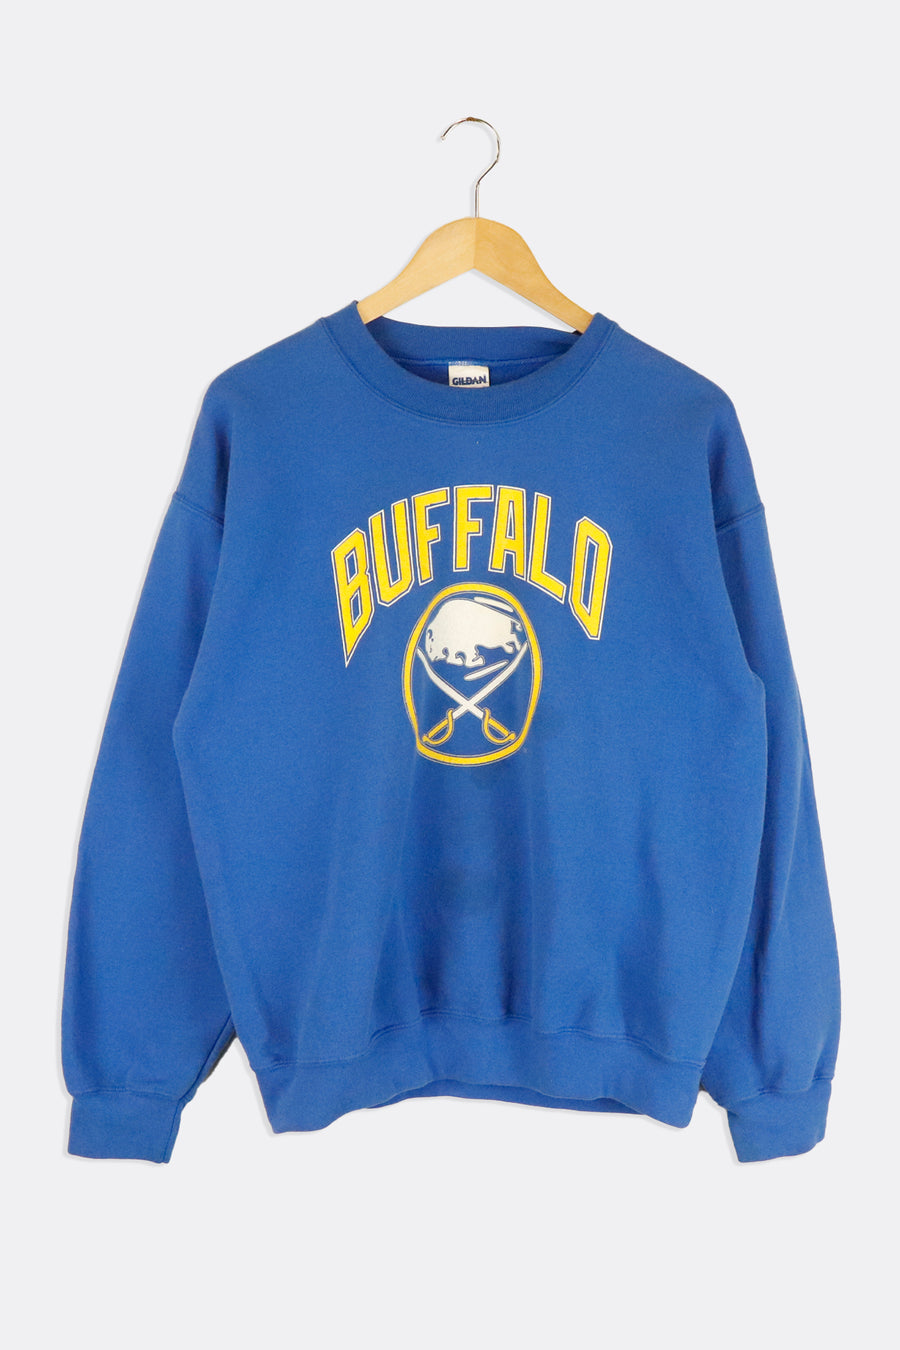 Vintage NHL Buffalo Sabres Simple Logo And Font Vinyl Sweatshirt Sz M